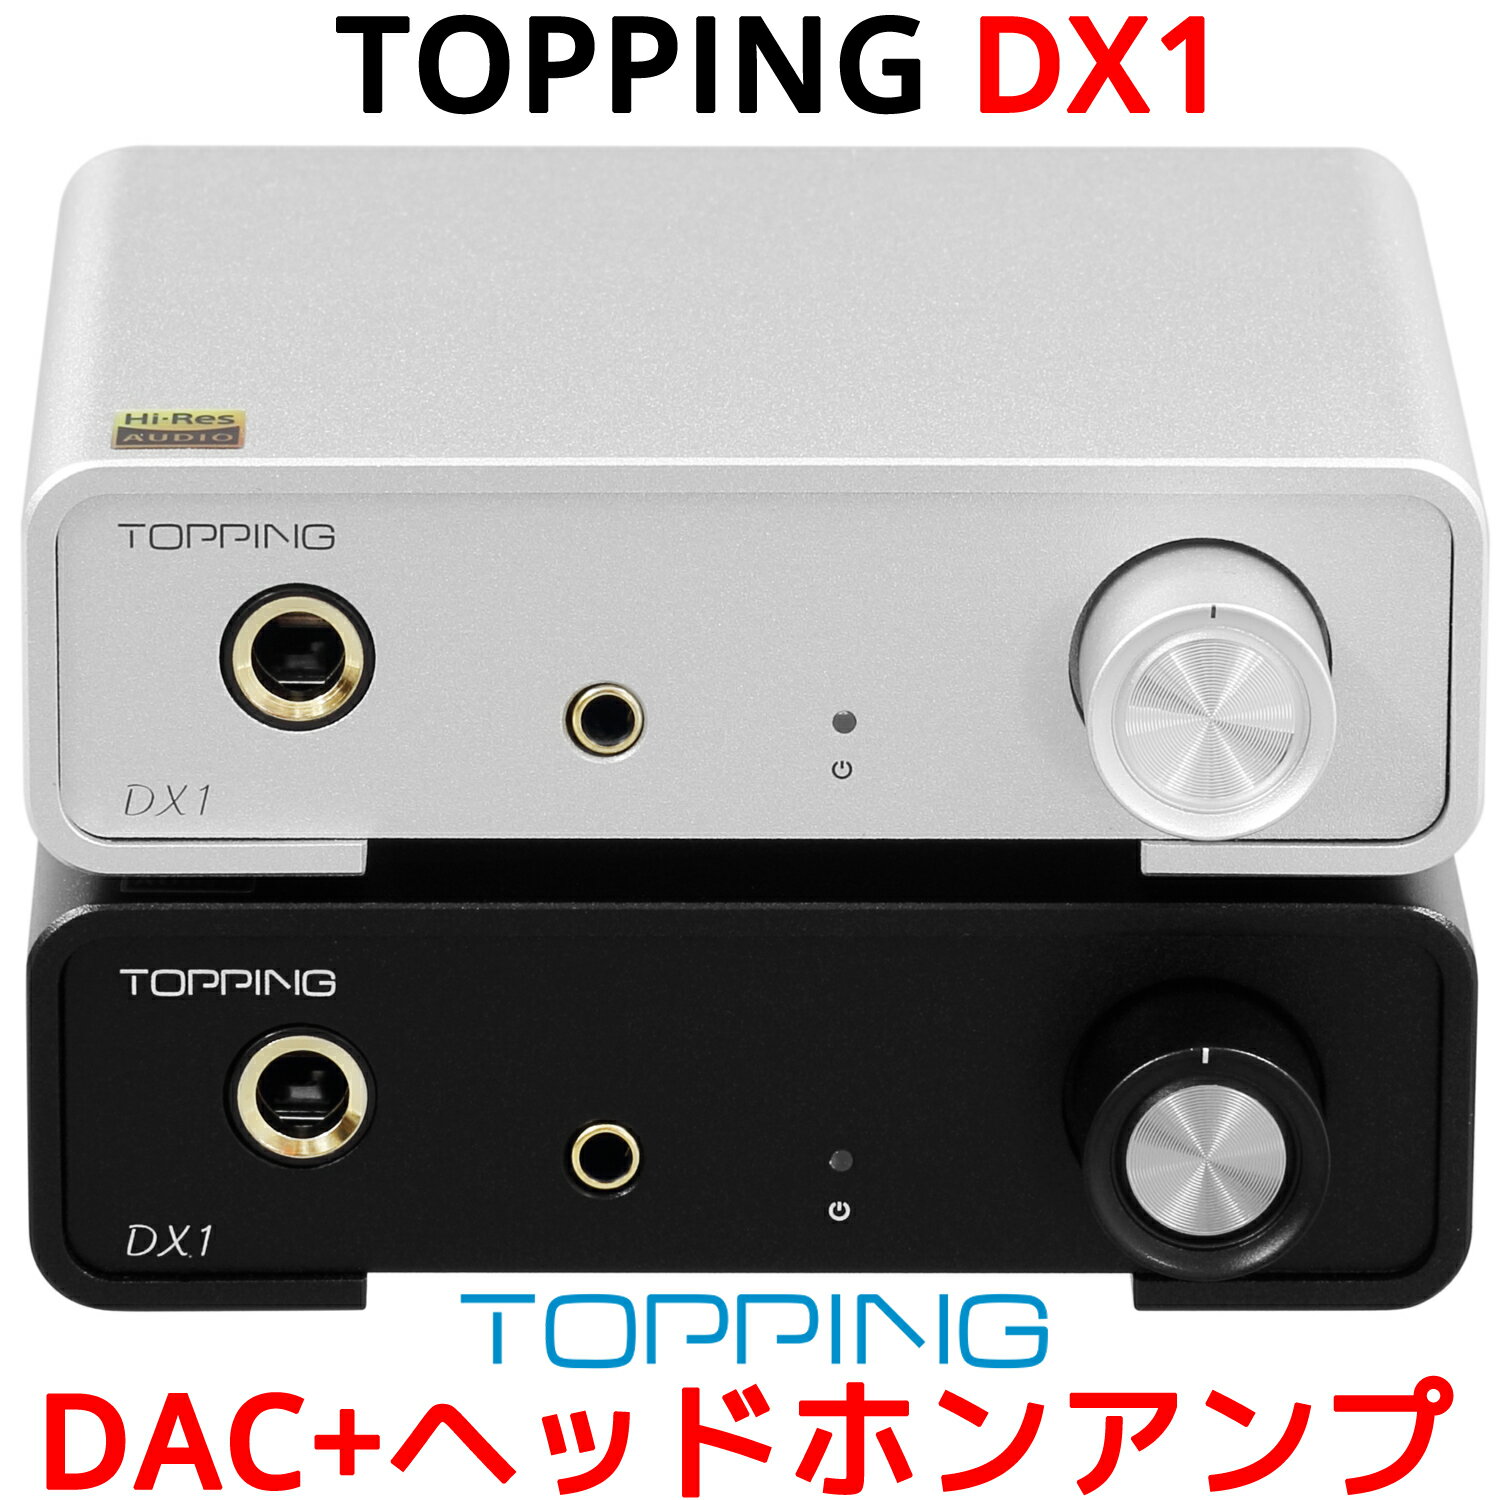 Topping DX1 USB DAC ヘッドホンアンプ ハイレゾ 6.35mm 3.5mm トッピング ヘッドフォン アンプ AK4493S XMOS XU208 DSD256 PCM384kHz USBバスパワー 高出力 2段階ゲイン RCA iPhone iPad アイ…